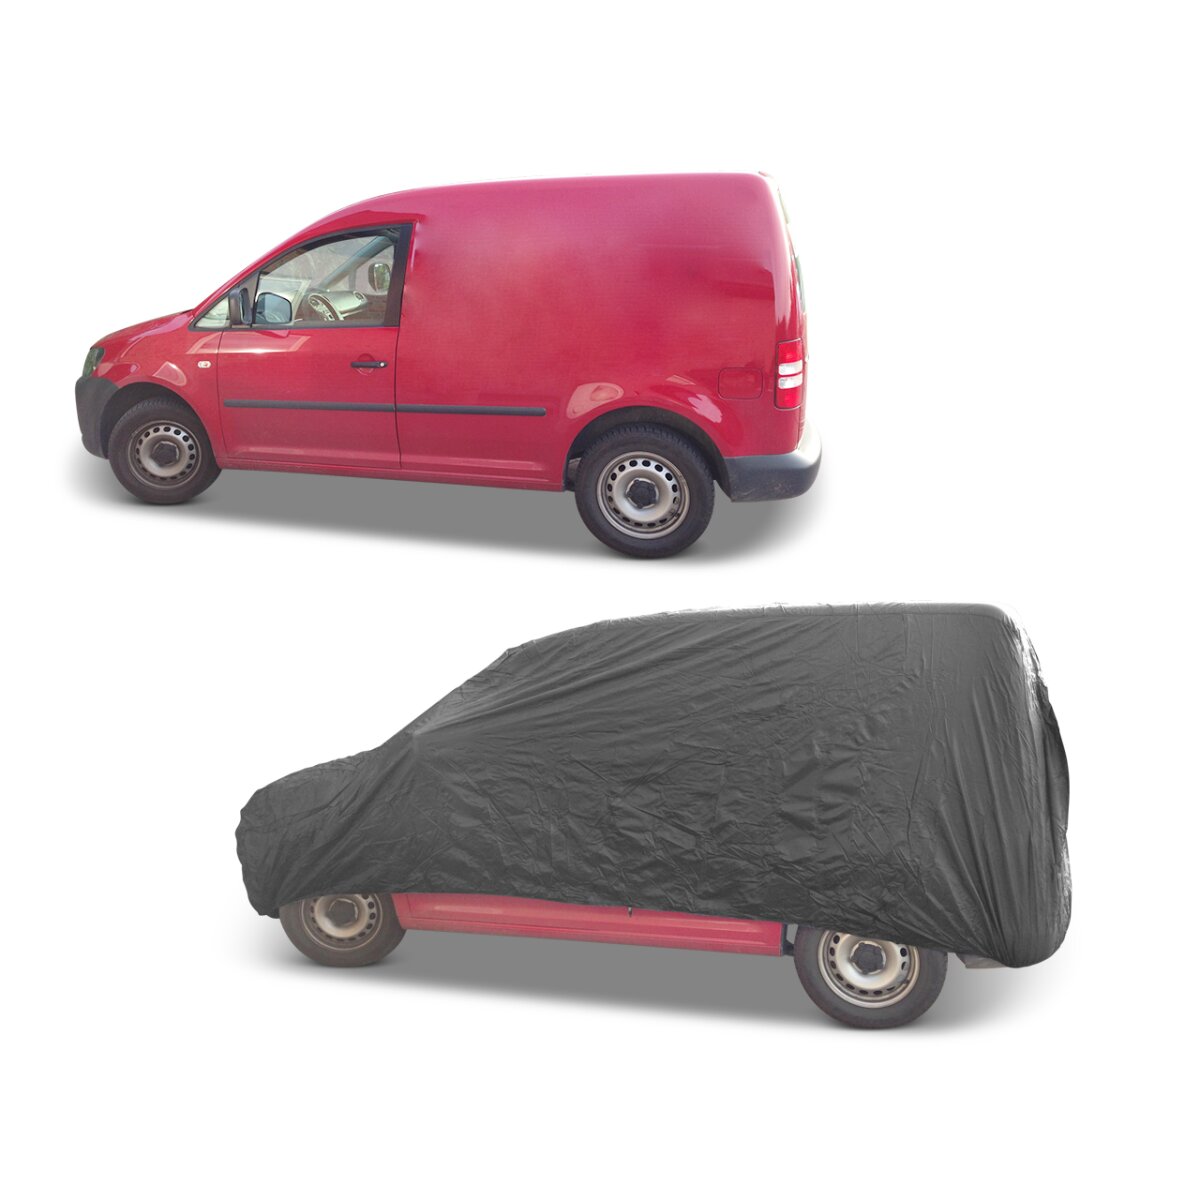 Car Cover for VW Caddy 9KV, 2K, van, station wagon, 79,00 €